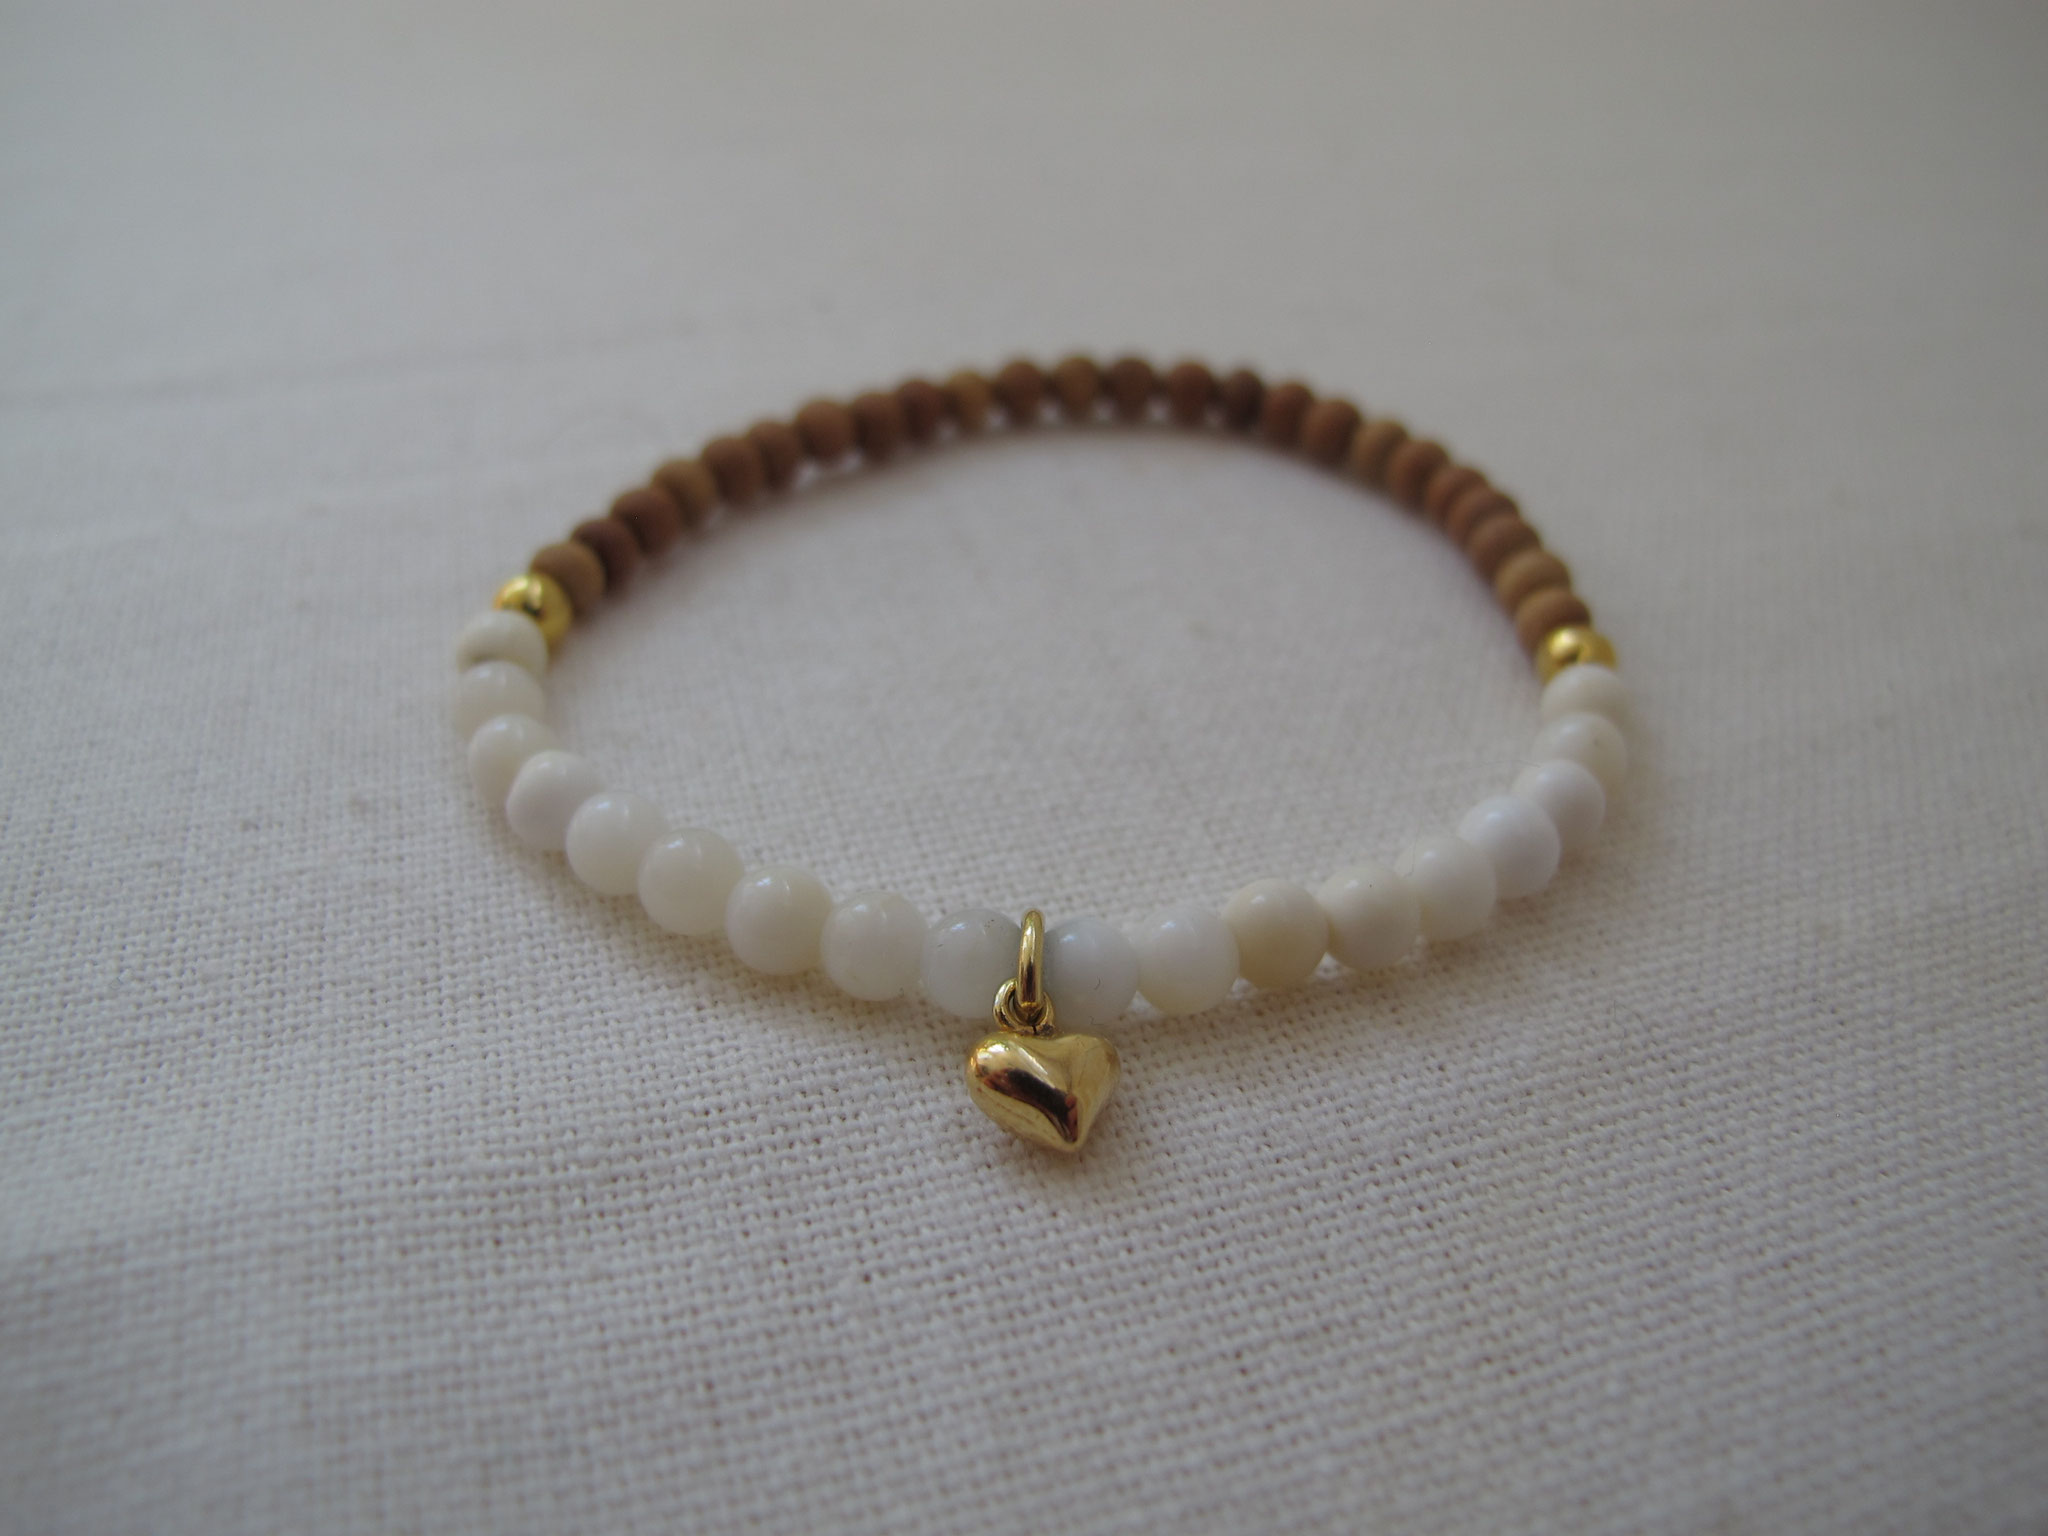 White opal, sandalwood and gold-coated heart pendant